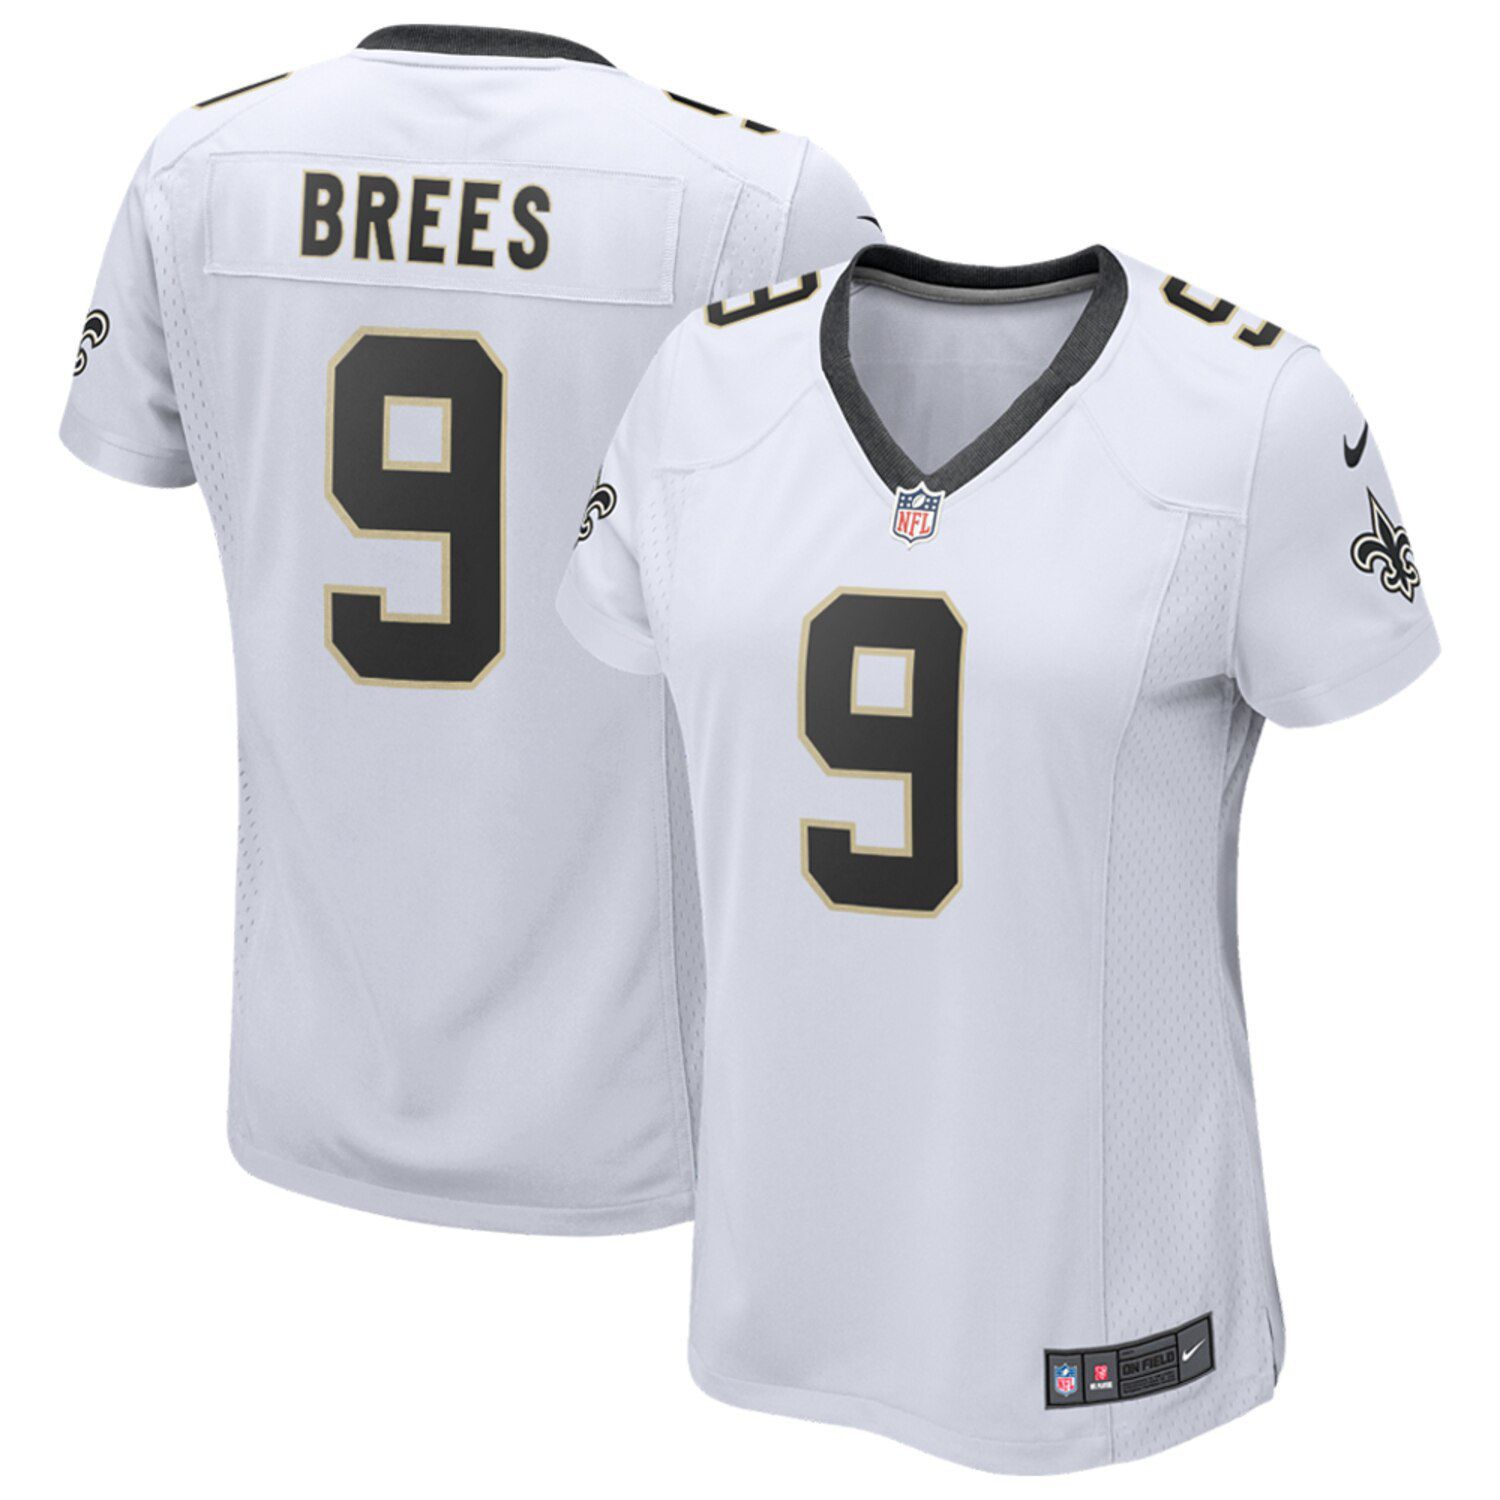 Drew Brees White New Orleans Saints 